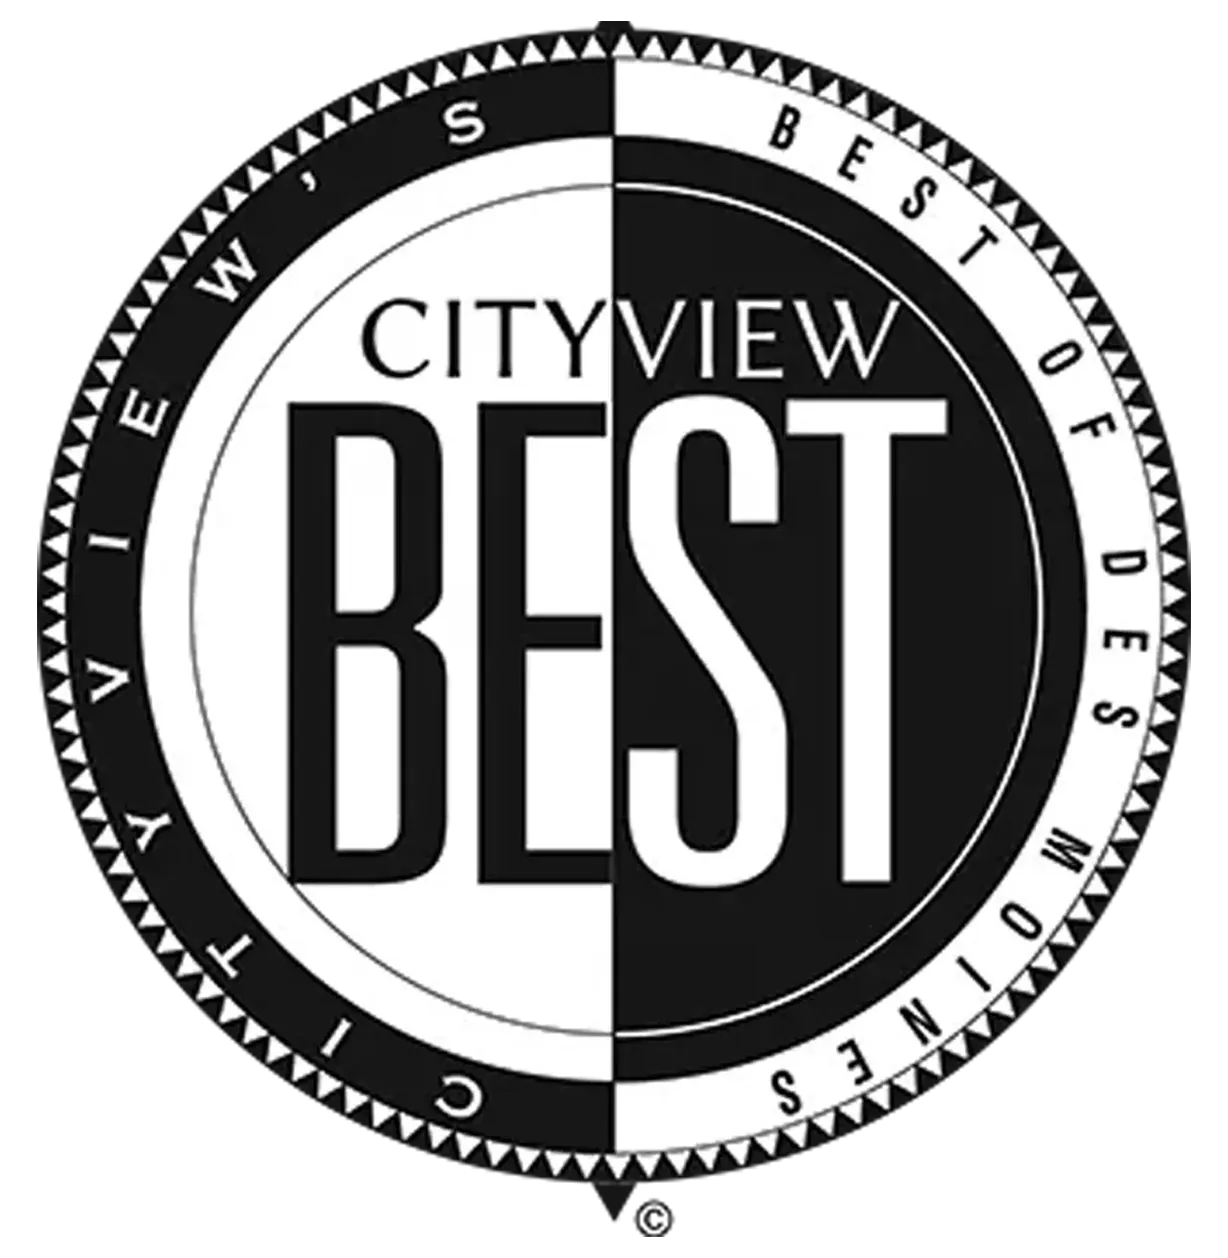 City View Best award